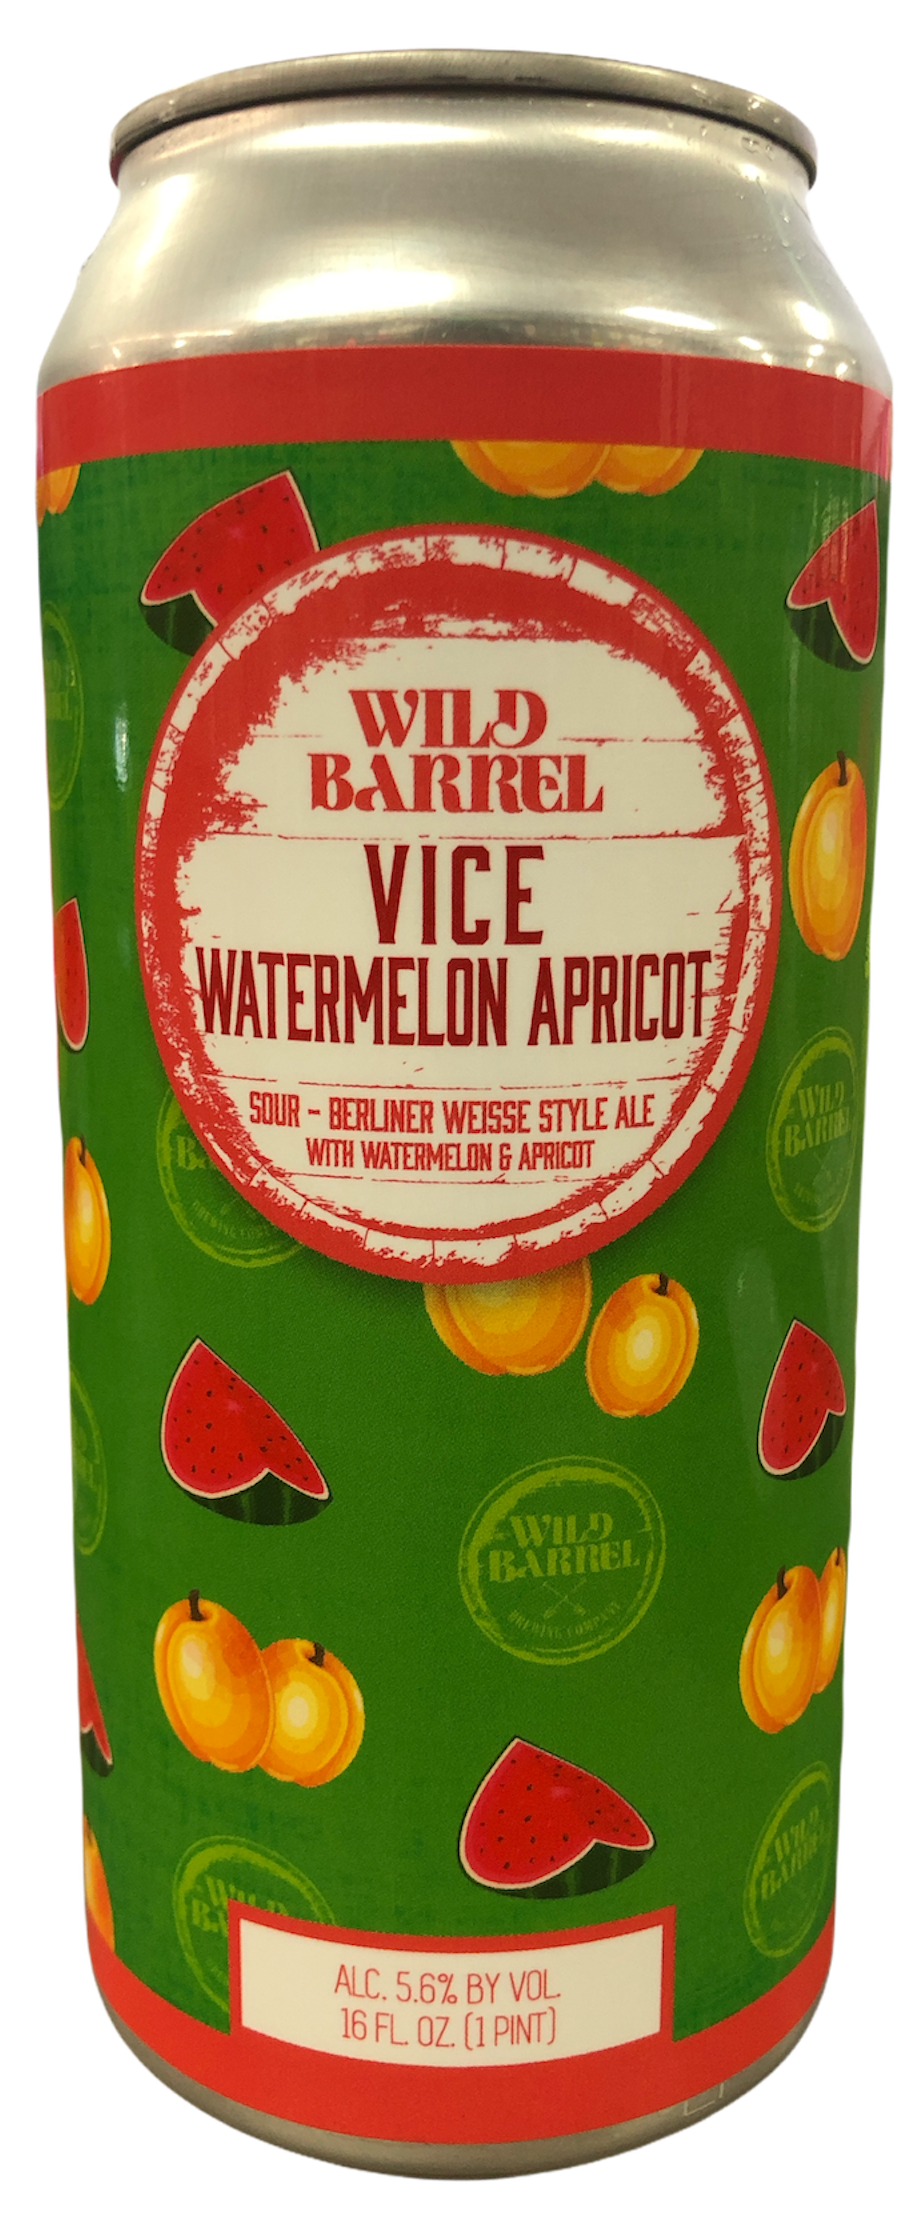 Buy Wild Barrel Vice Watermelon Apricot Online -Craft City